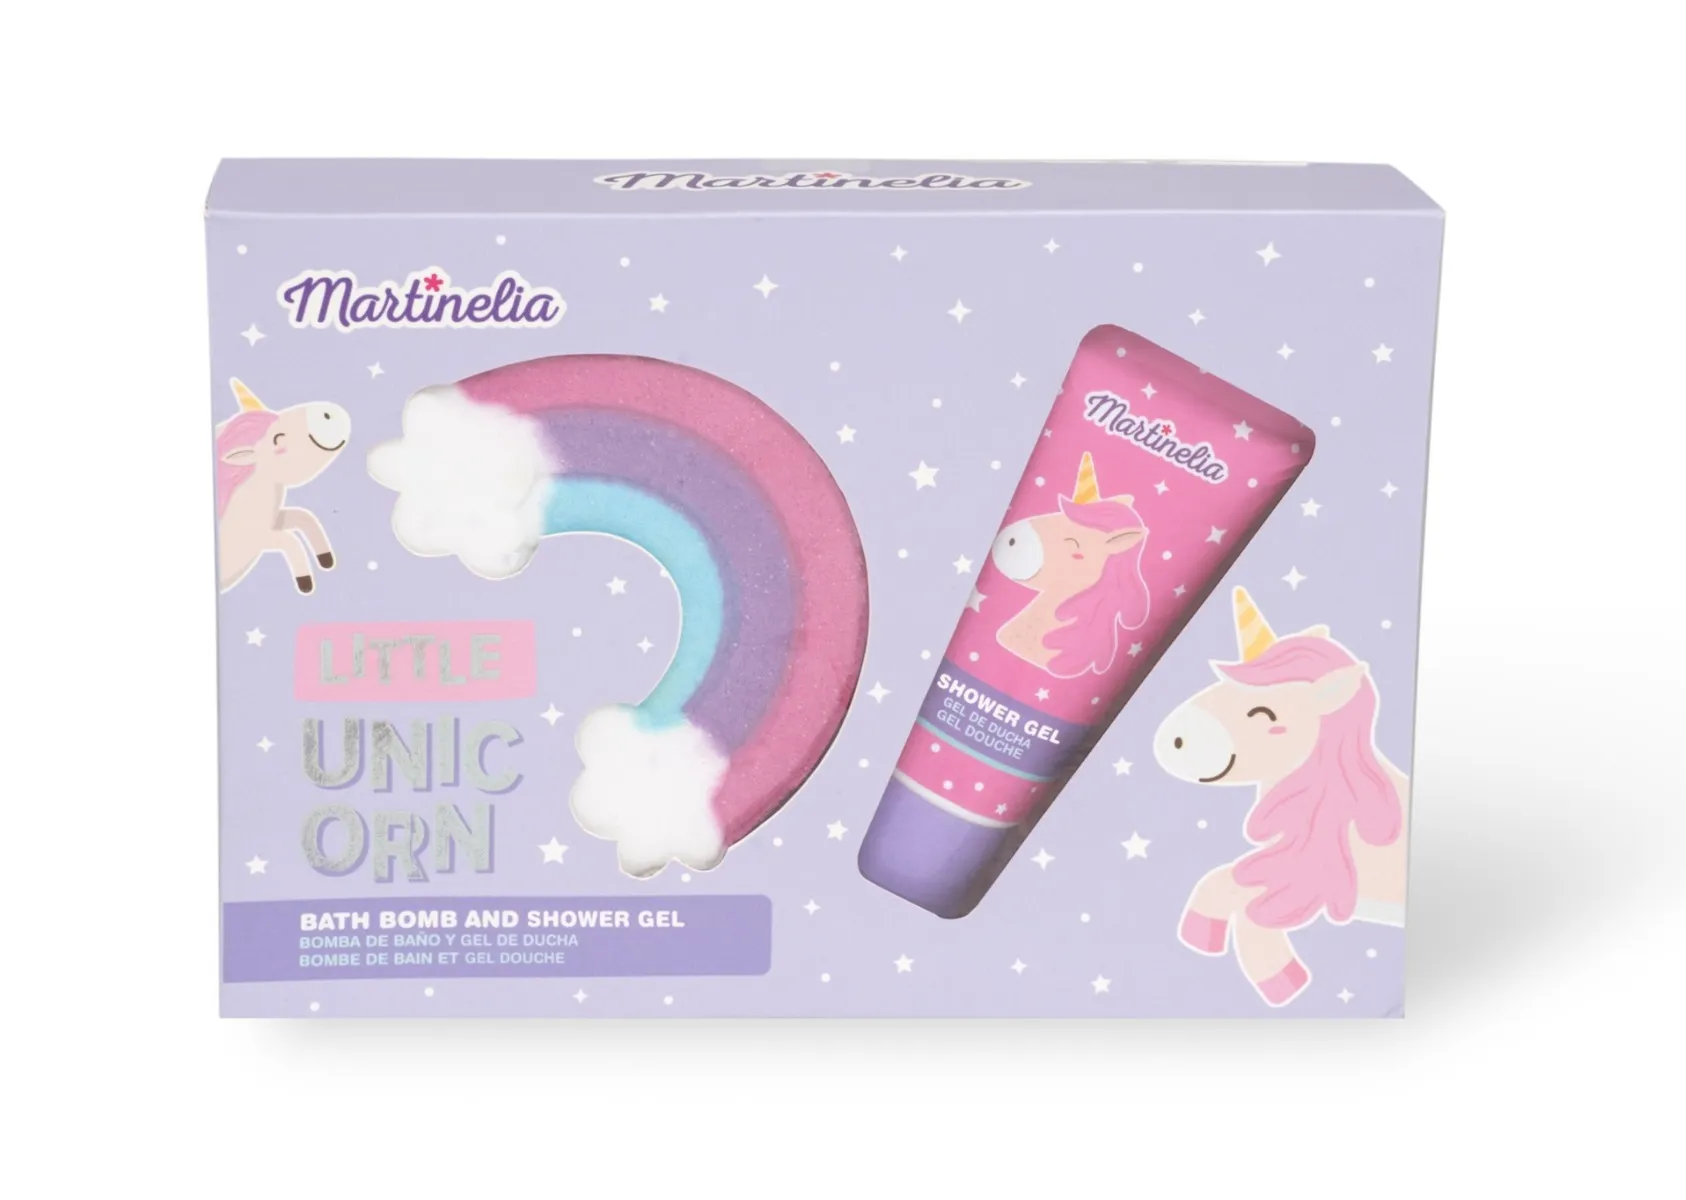 Martinelia Little Unicorn sprchový gel a bomba do koupele